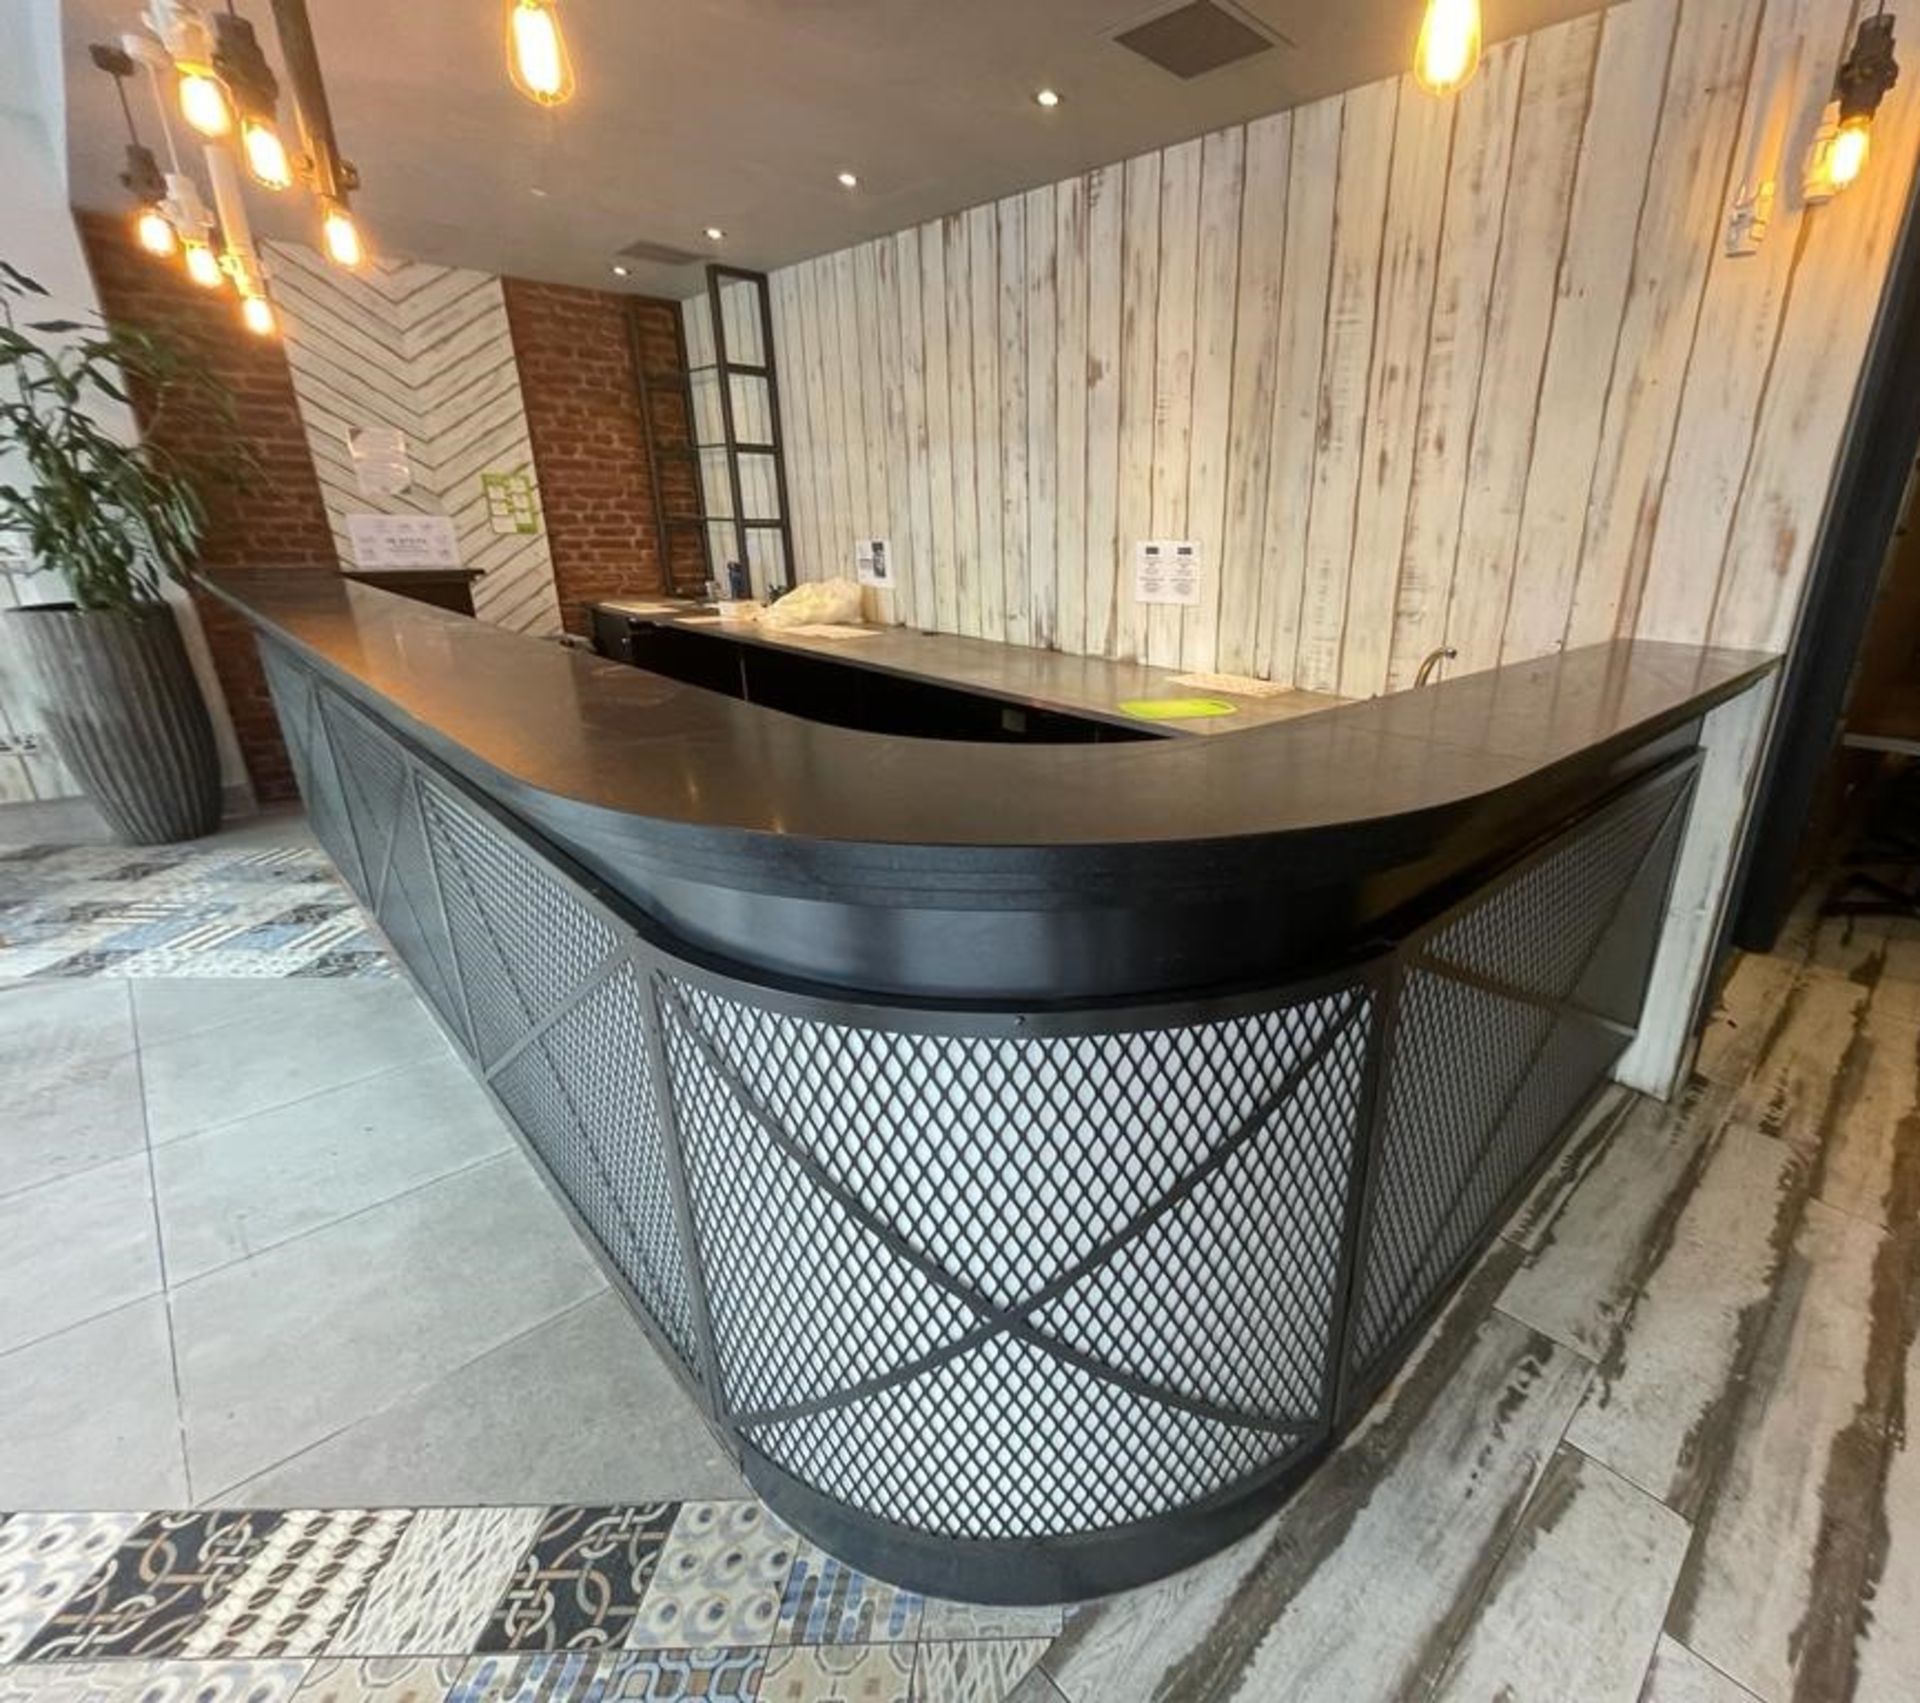 1 x Restaurant Drinks Bar Featuring a Shaped Design, Granite Worktop, Diamond Lattice Fascia - Image 14 of 25